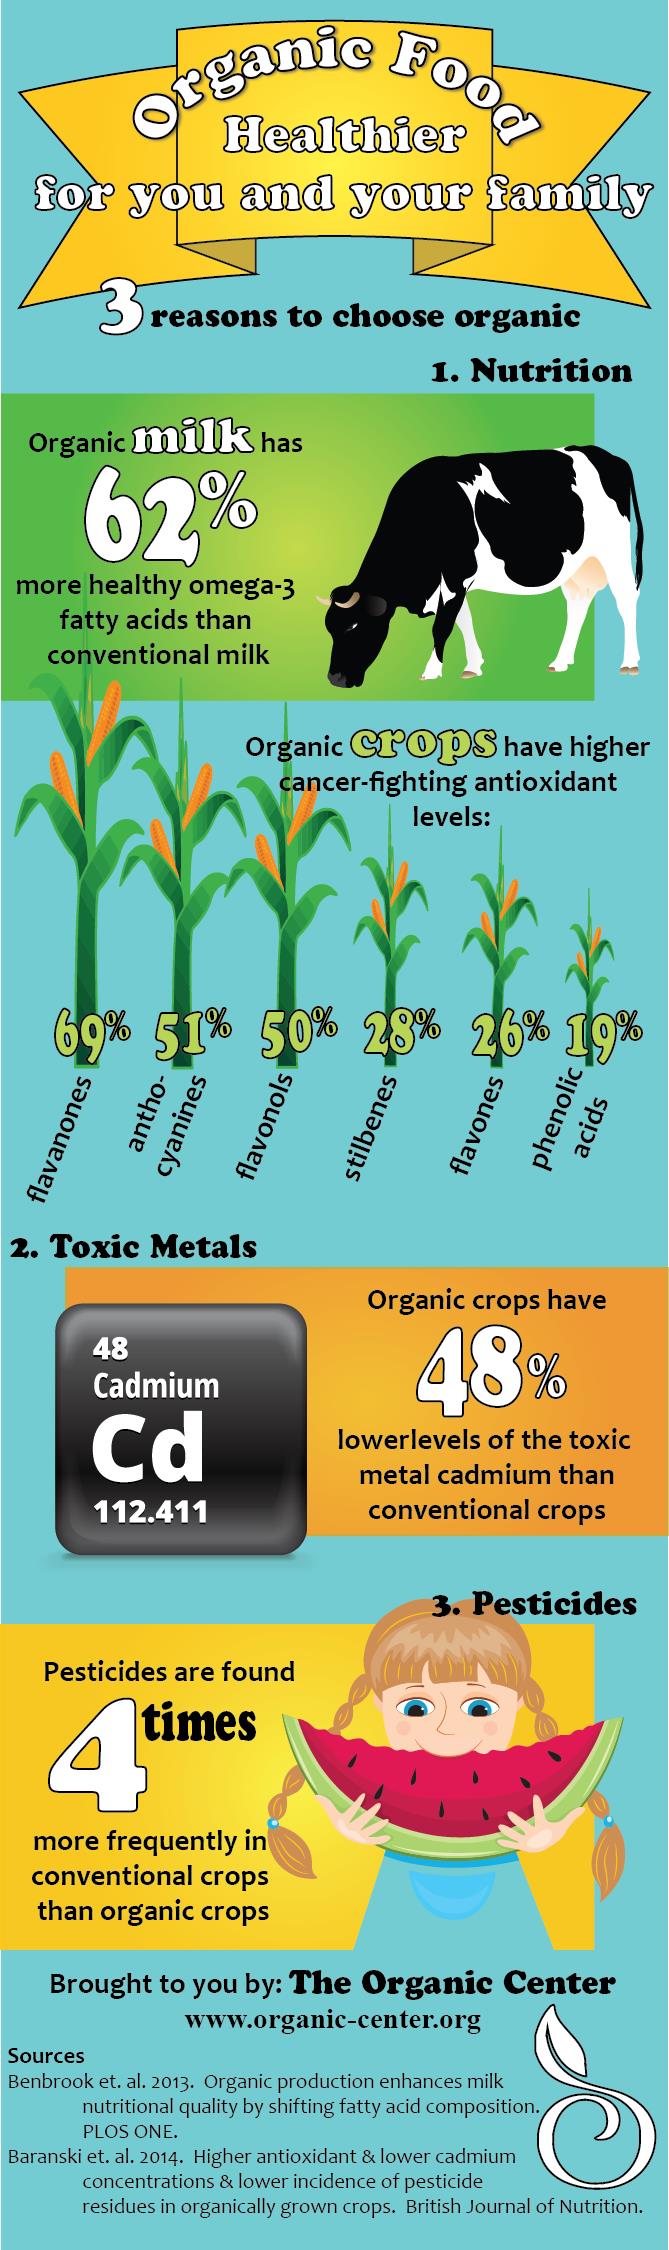 Impact of Organic Food on Economy